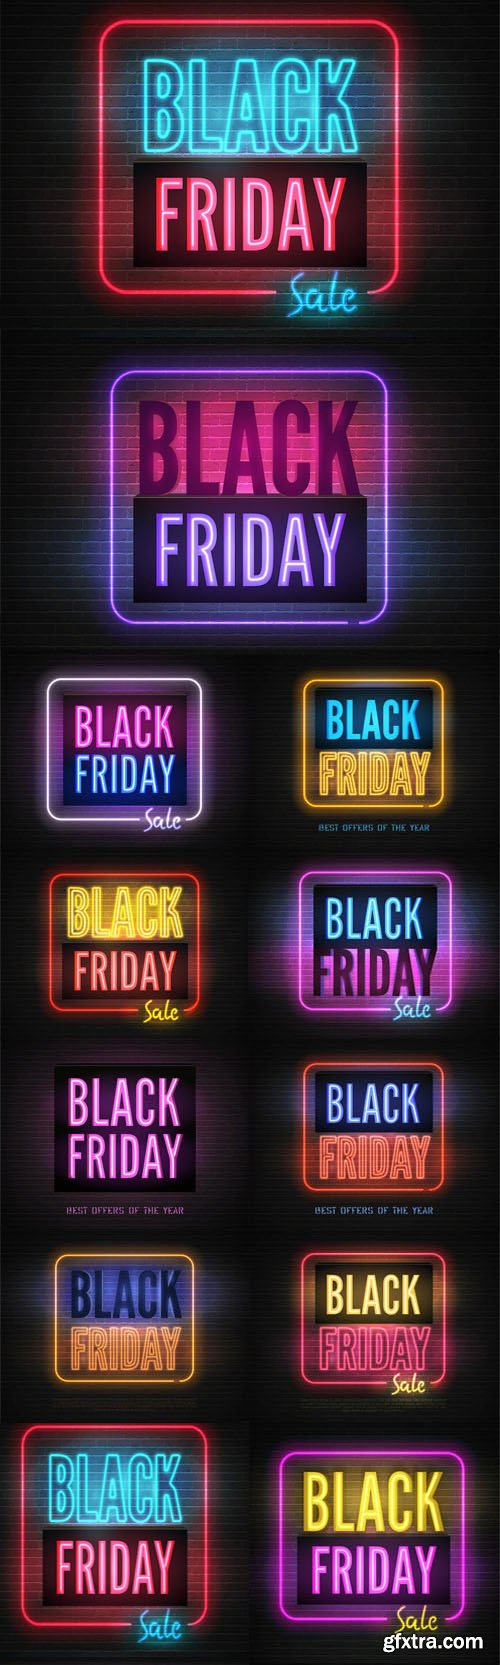 Black Friday - 10+ Neon Light Box Vector Templates Collection